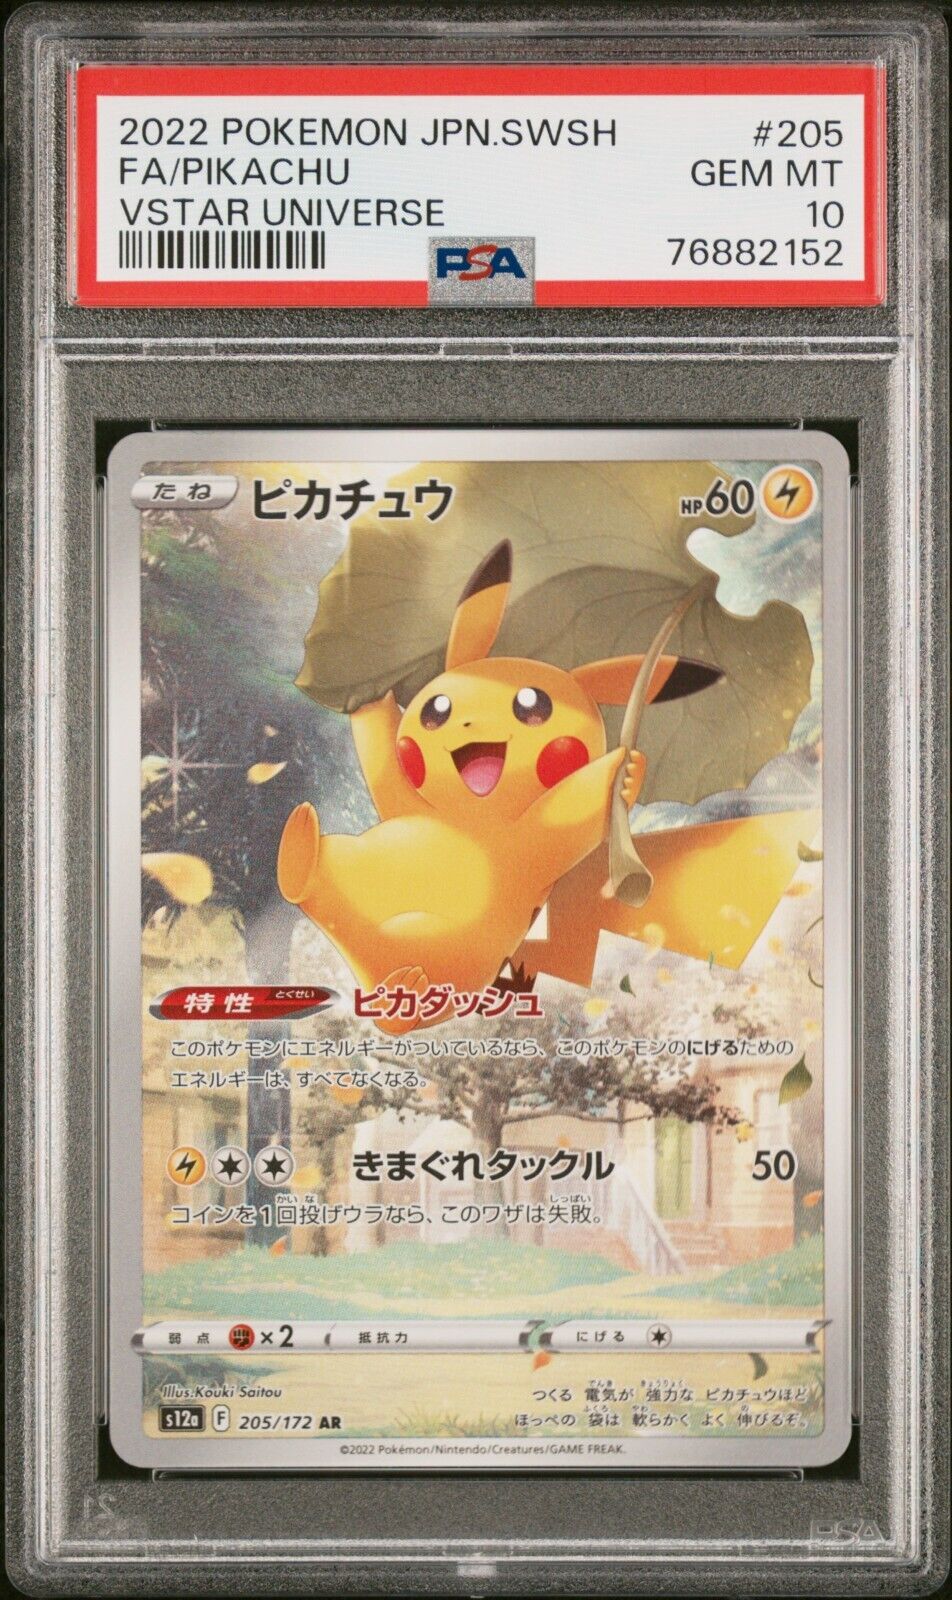 Pokemon PIKACHU VSTAR UNIVERSE PSA10 205172 AR s12a Japonais Japanese Jap JPN